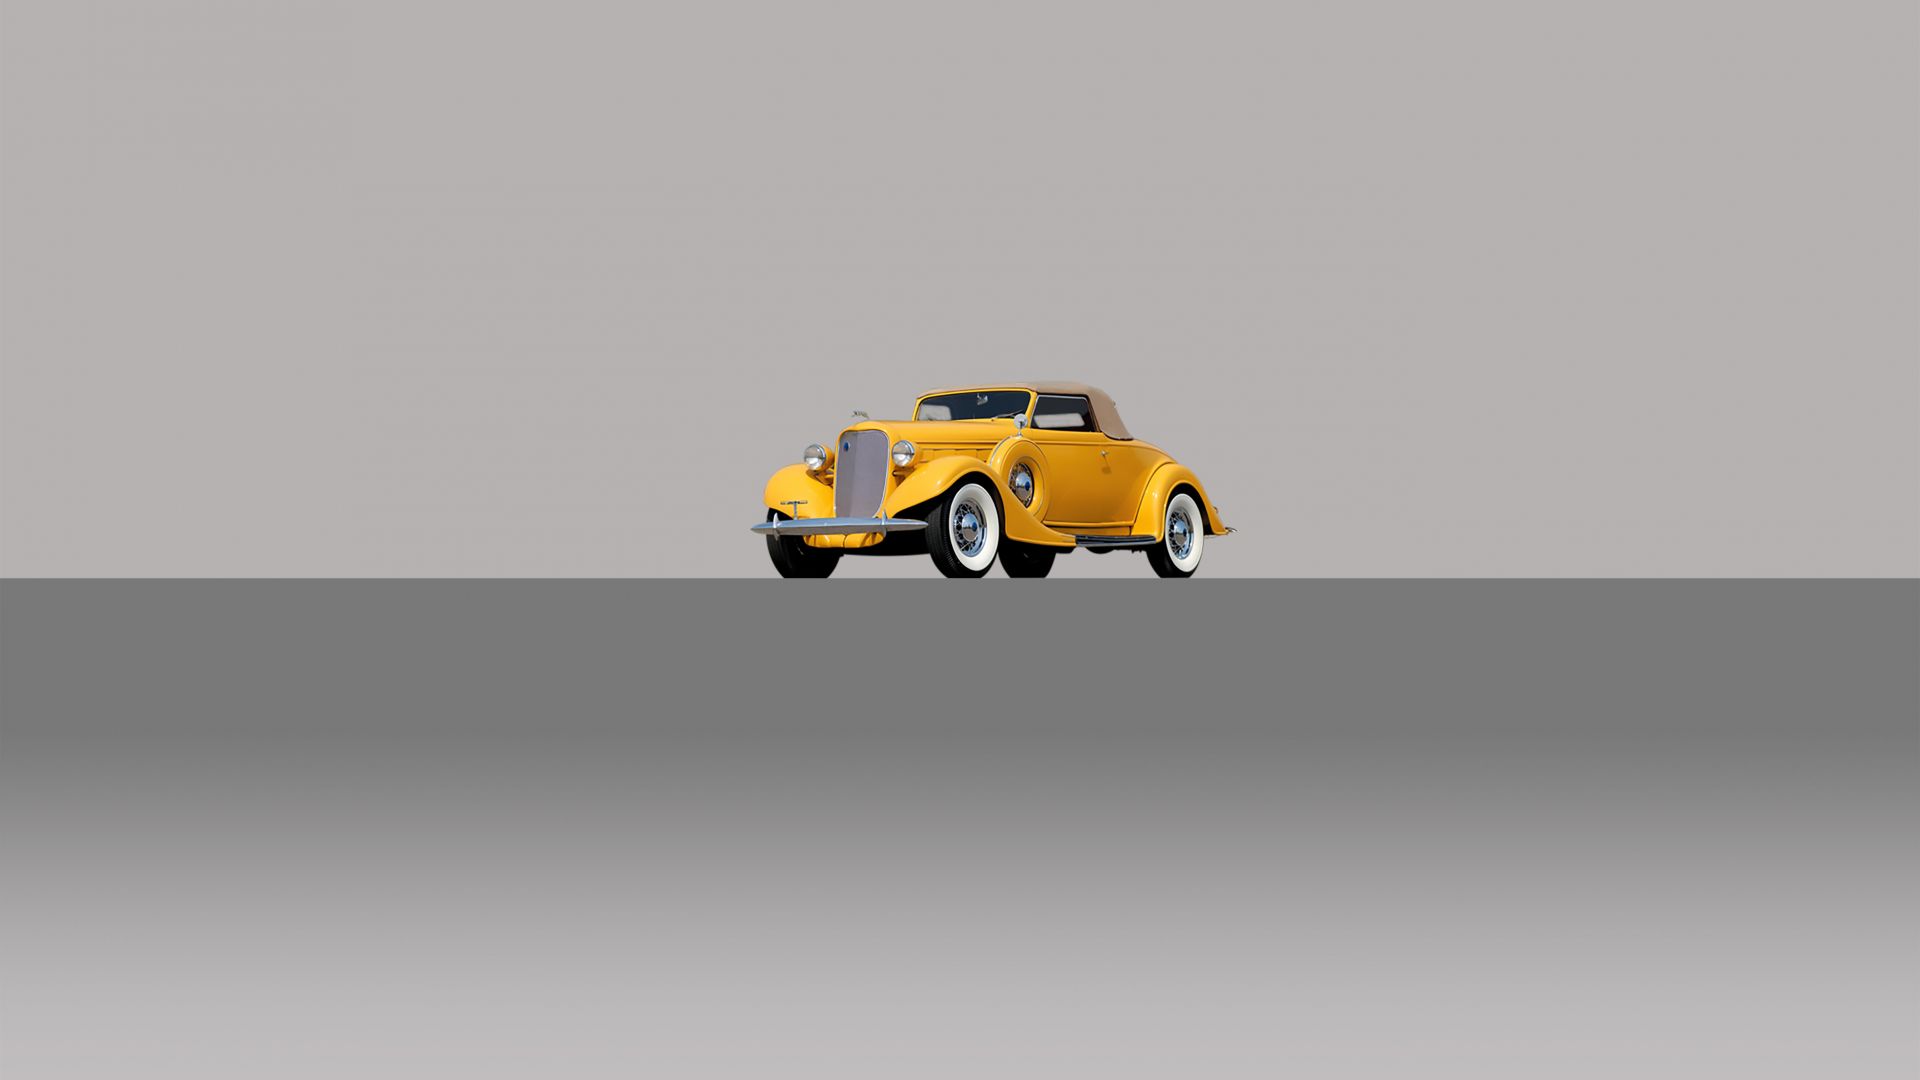 Desktop Wallpaper Yellow Classic Car, Minimal, Hd Image, Picture,  Background, 8673fd